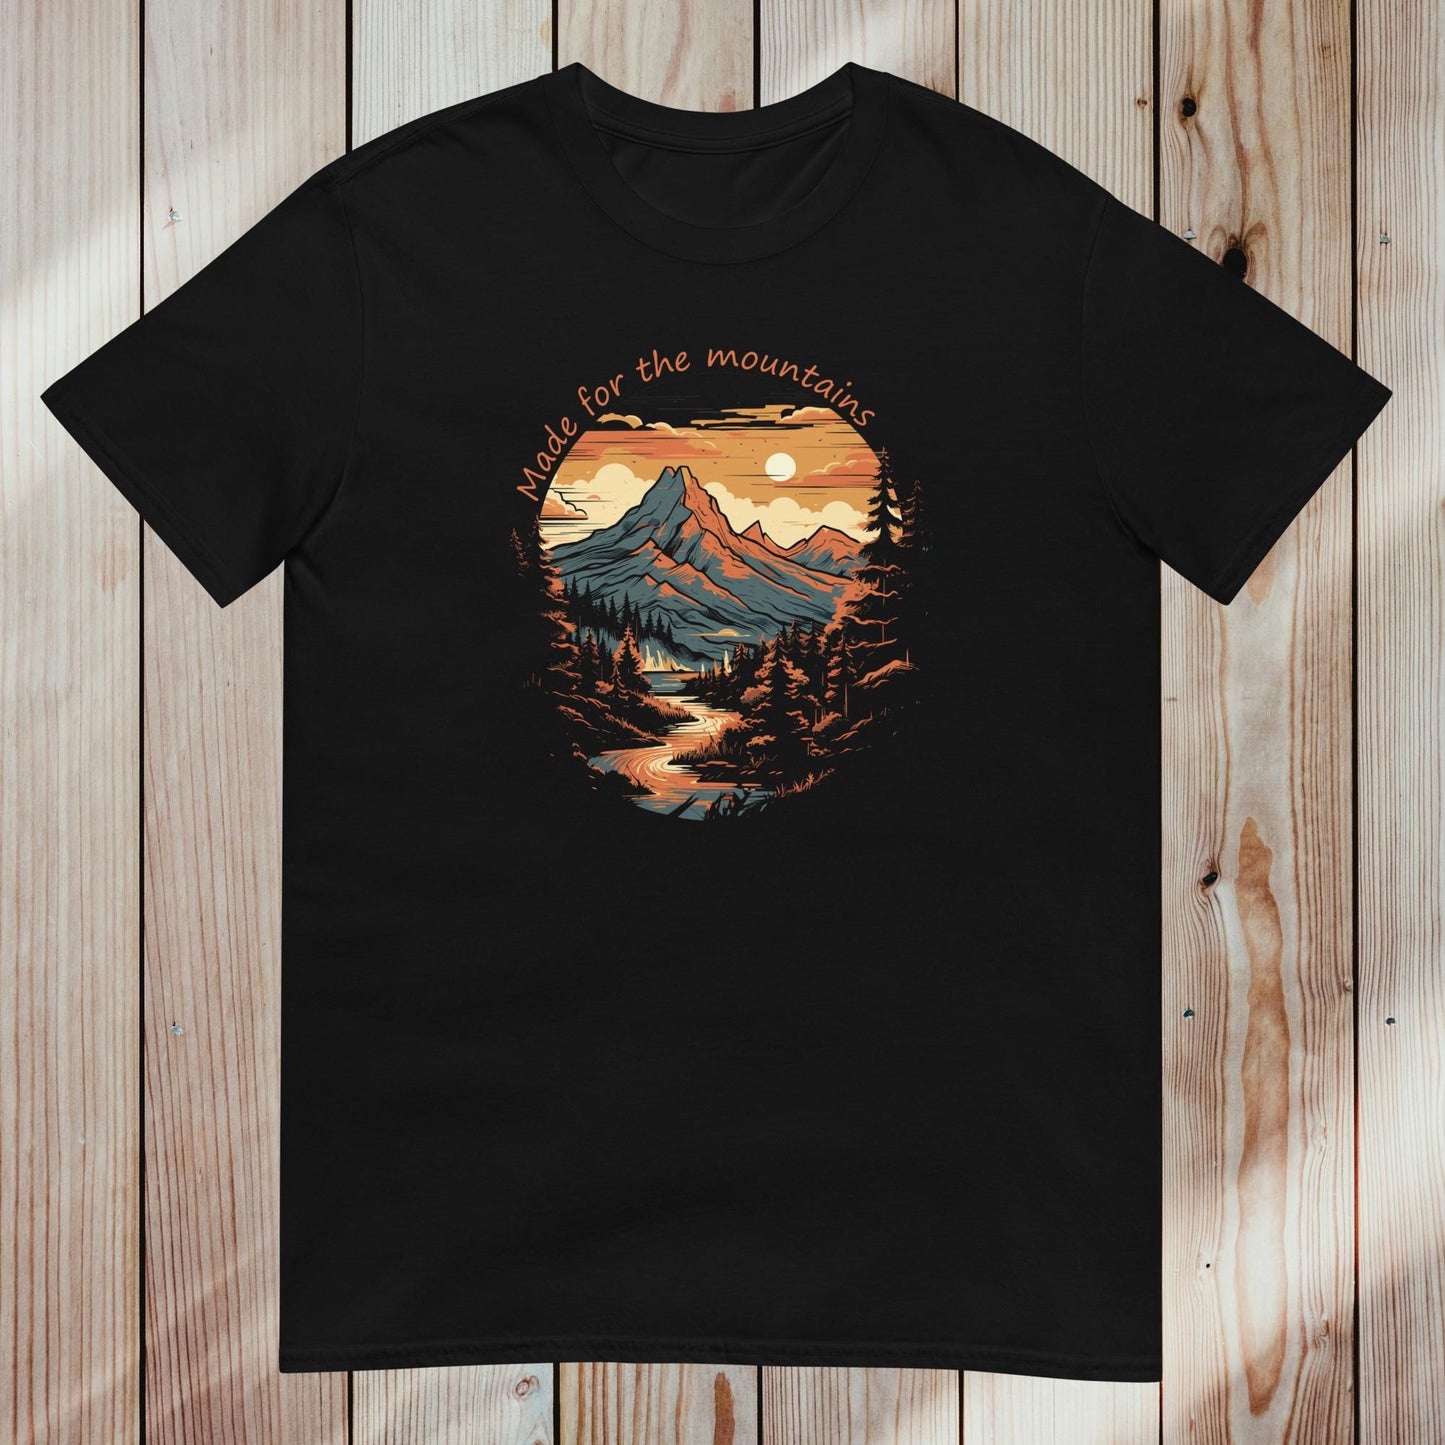 Unisex marškinėliai: "Made for the mountains" 1